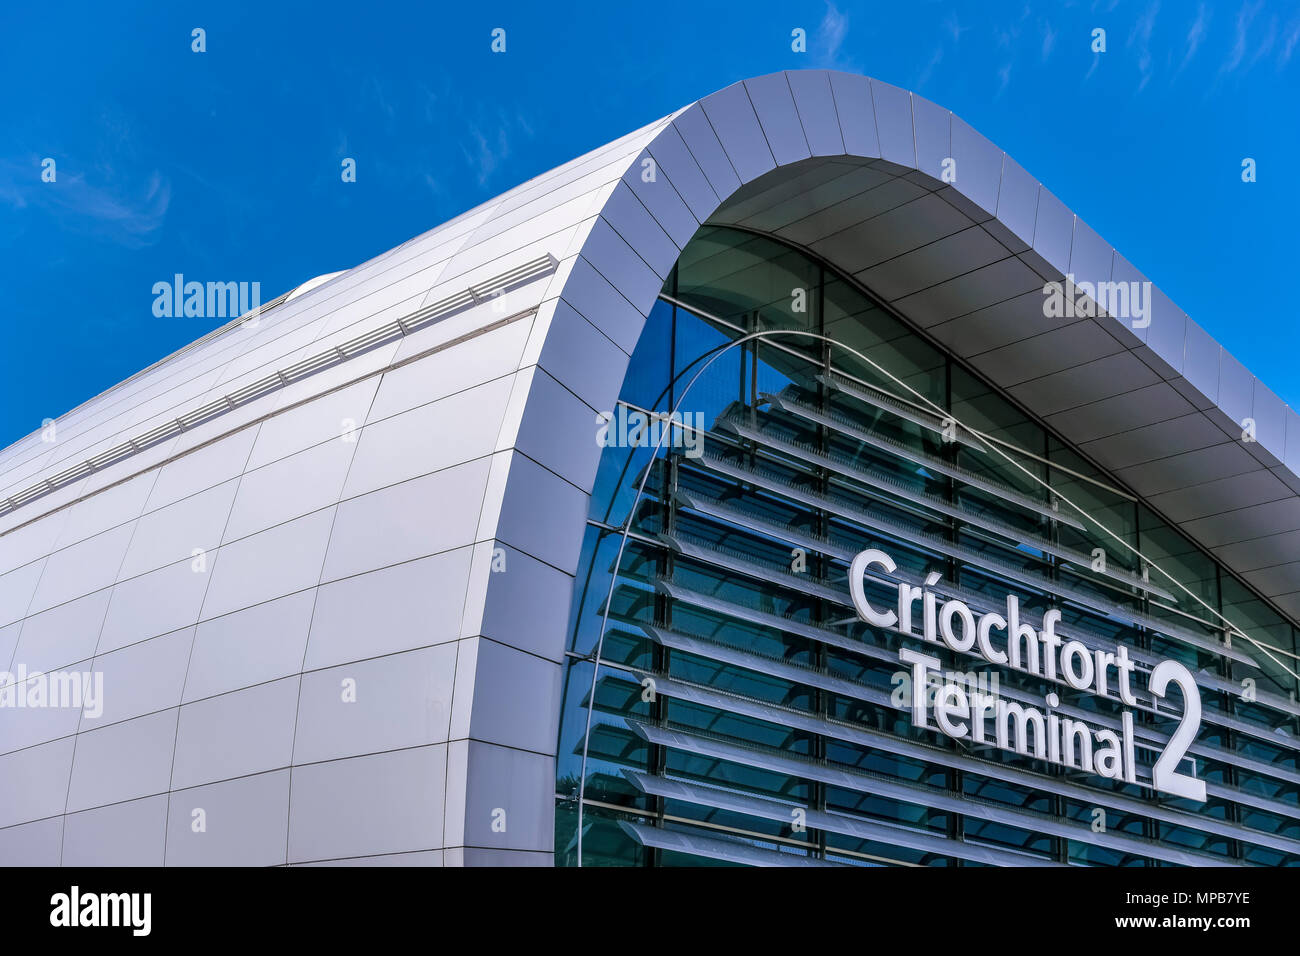 Neues Terminal 2, T2 Criochfort Dublin Interenational Airport DUB, von den Architekten Pascruf & Watson. Blauer Himmel, Kopierbereich, Nahaufnahme. Irland, Europa, EU. Stockfoto